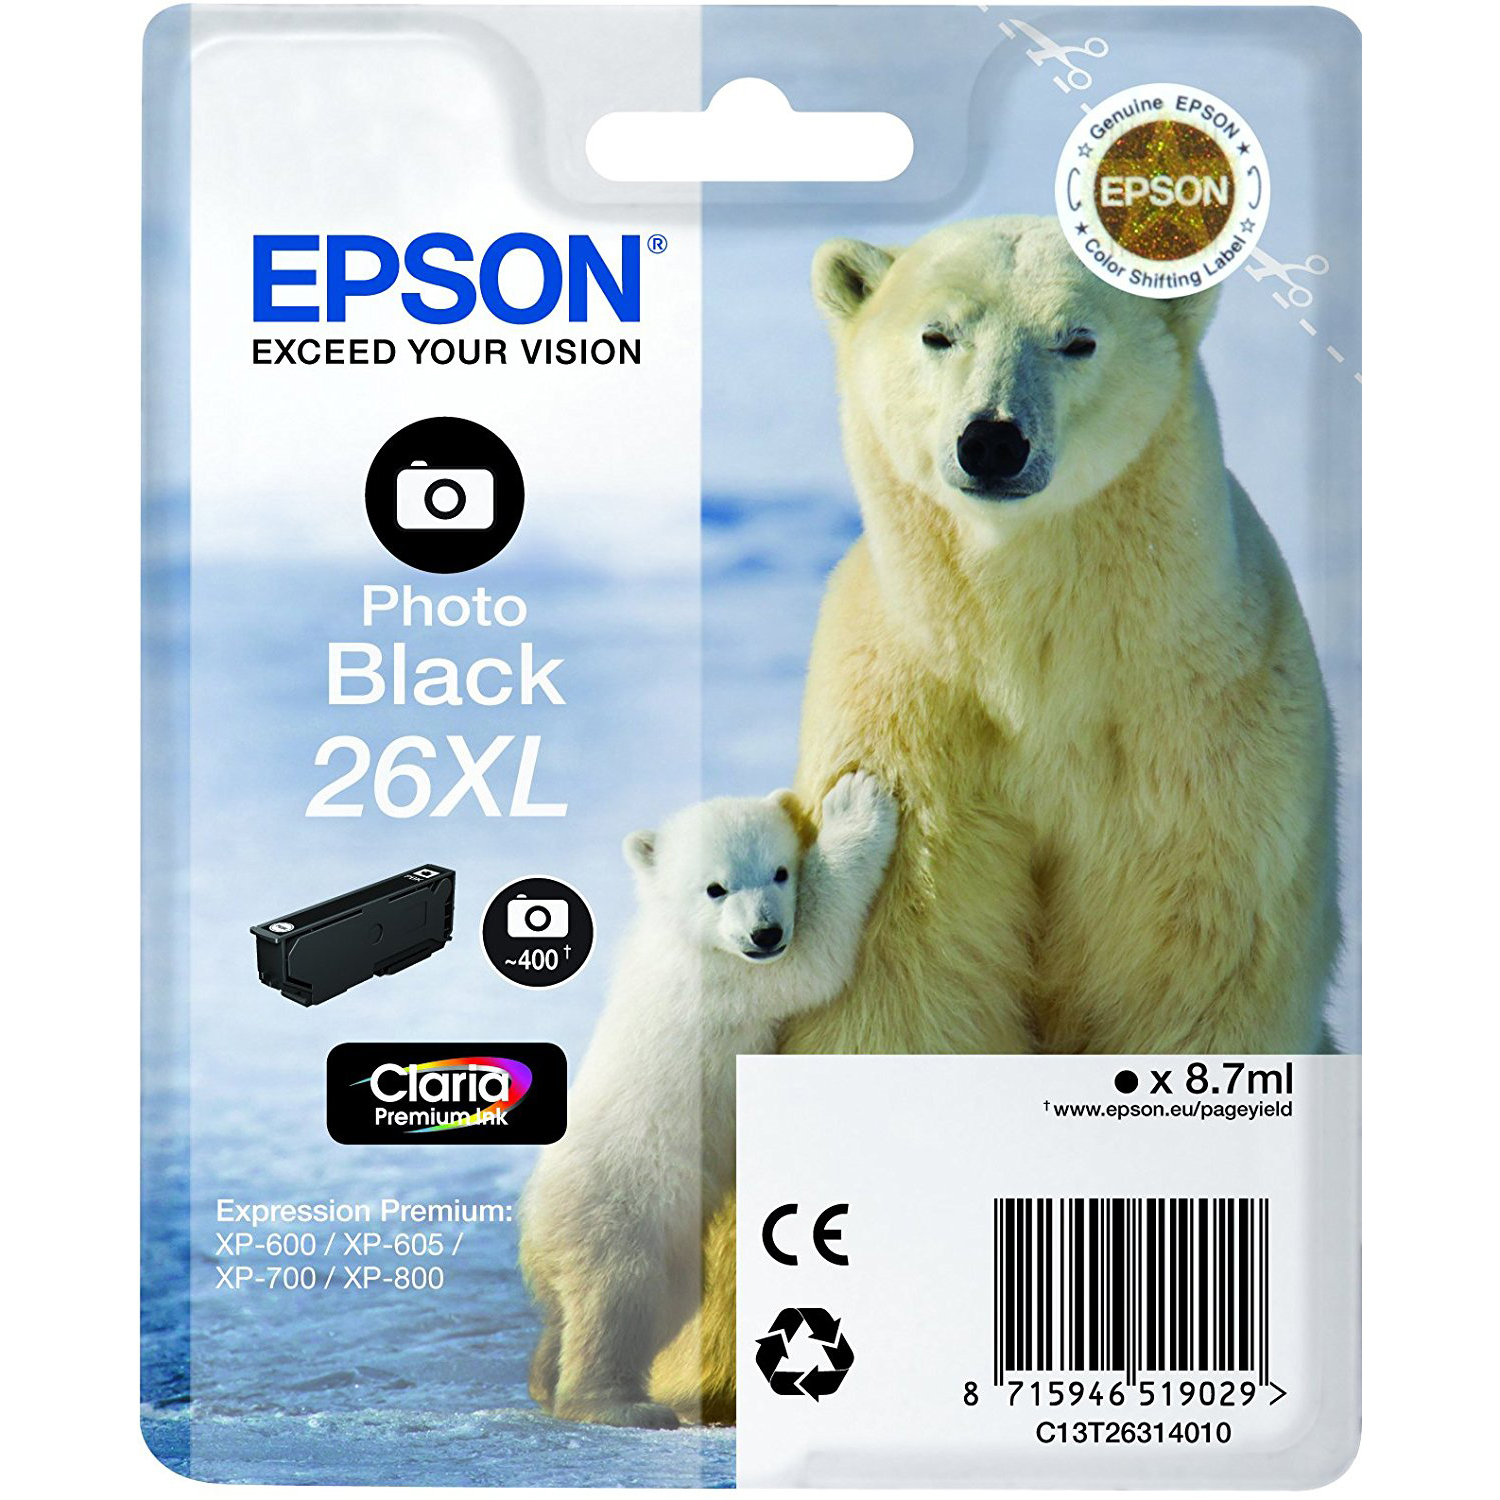 Original Epson 26XL Photo Black High Capacity Ink Cartridge (C13T26314012) T2631 Polar Bear